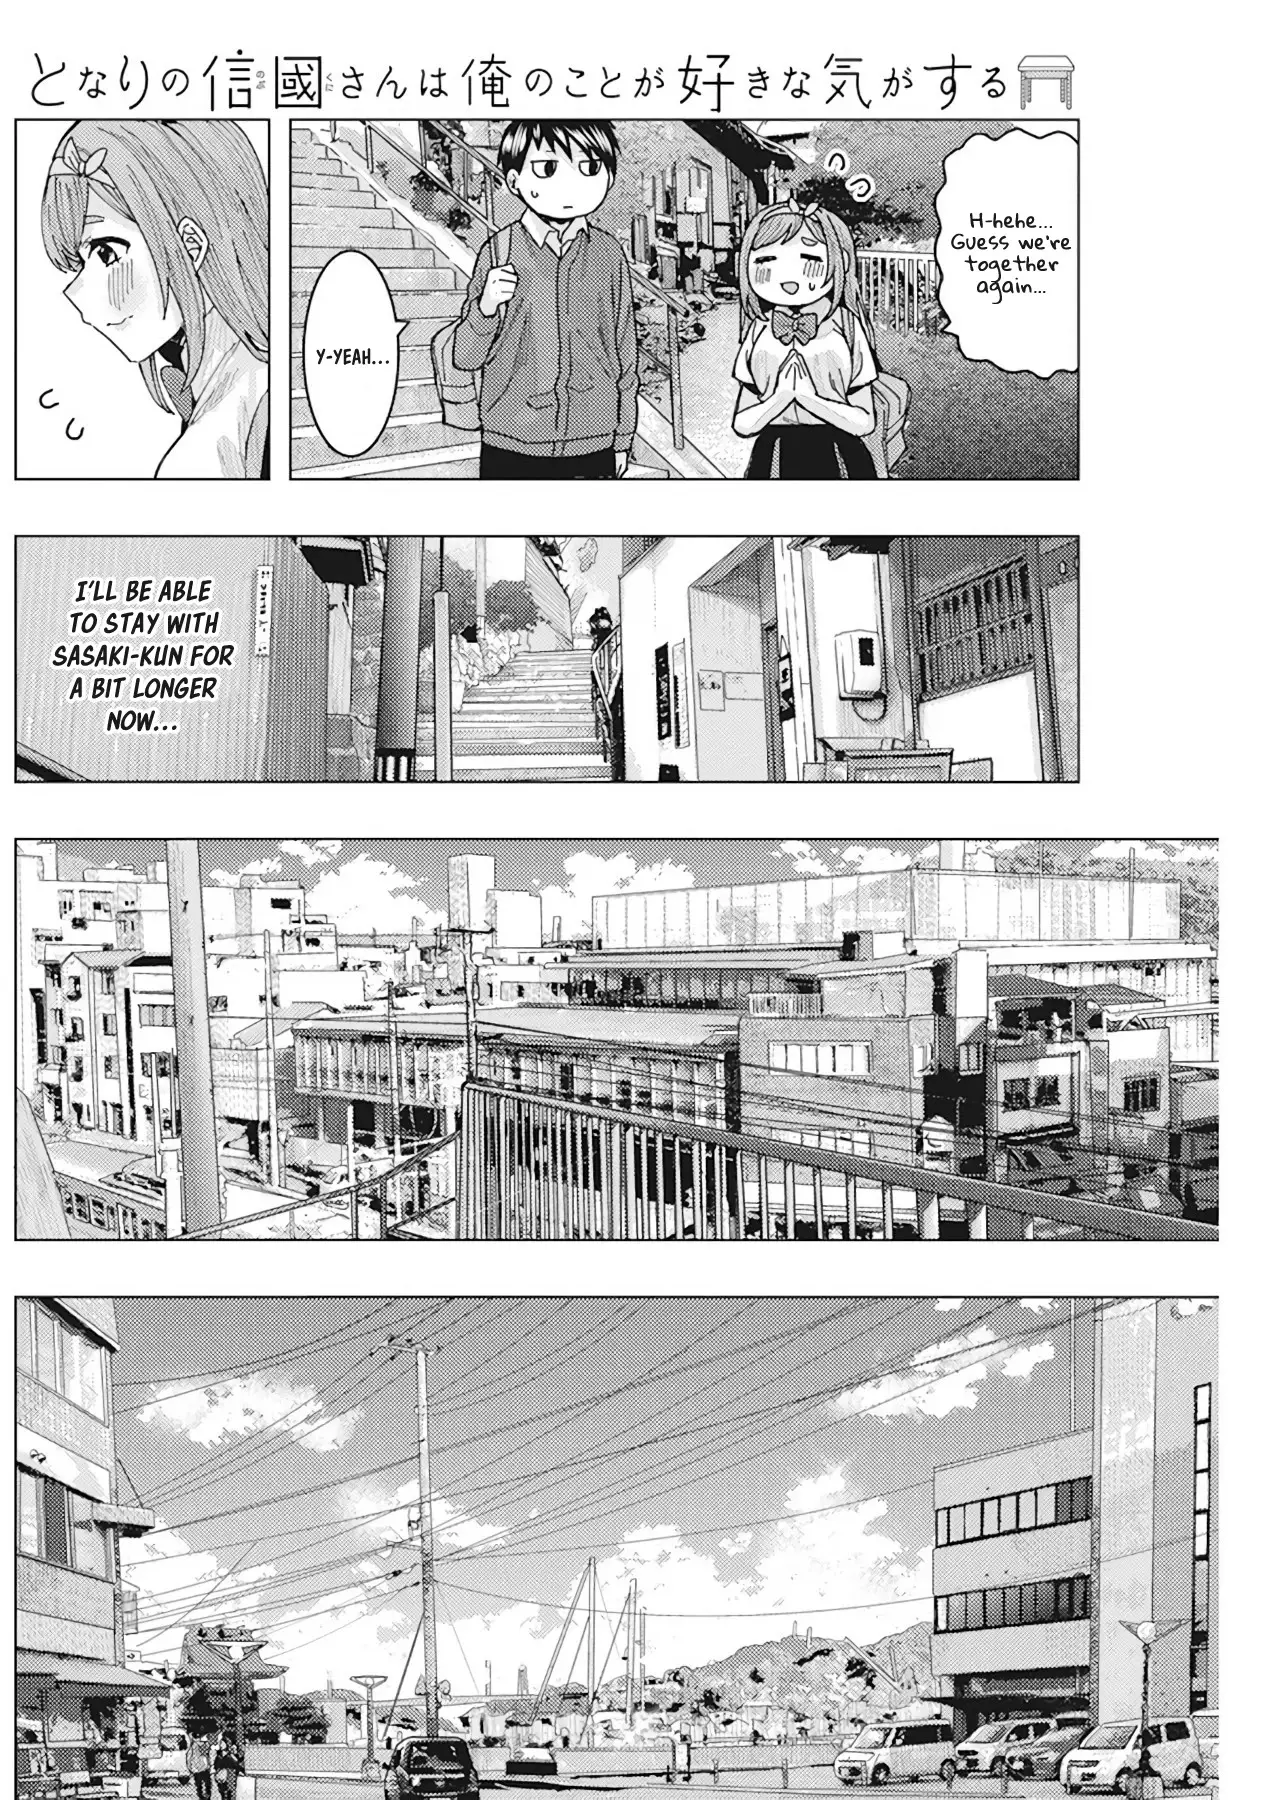 "nobukuni-San" Does She Like Me? - 10 page 8-5cf15142